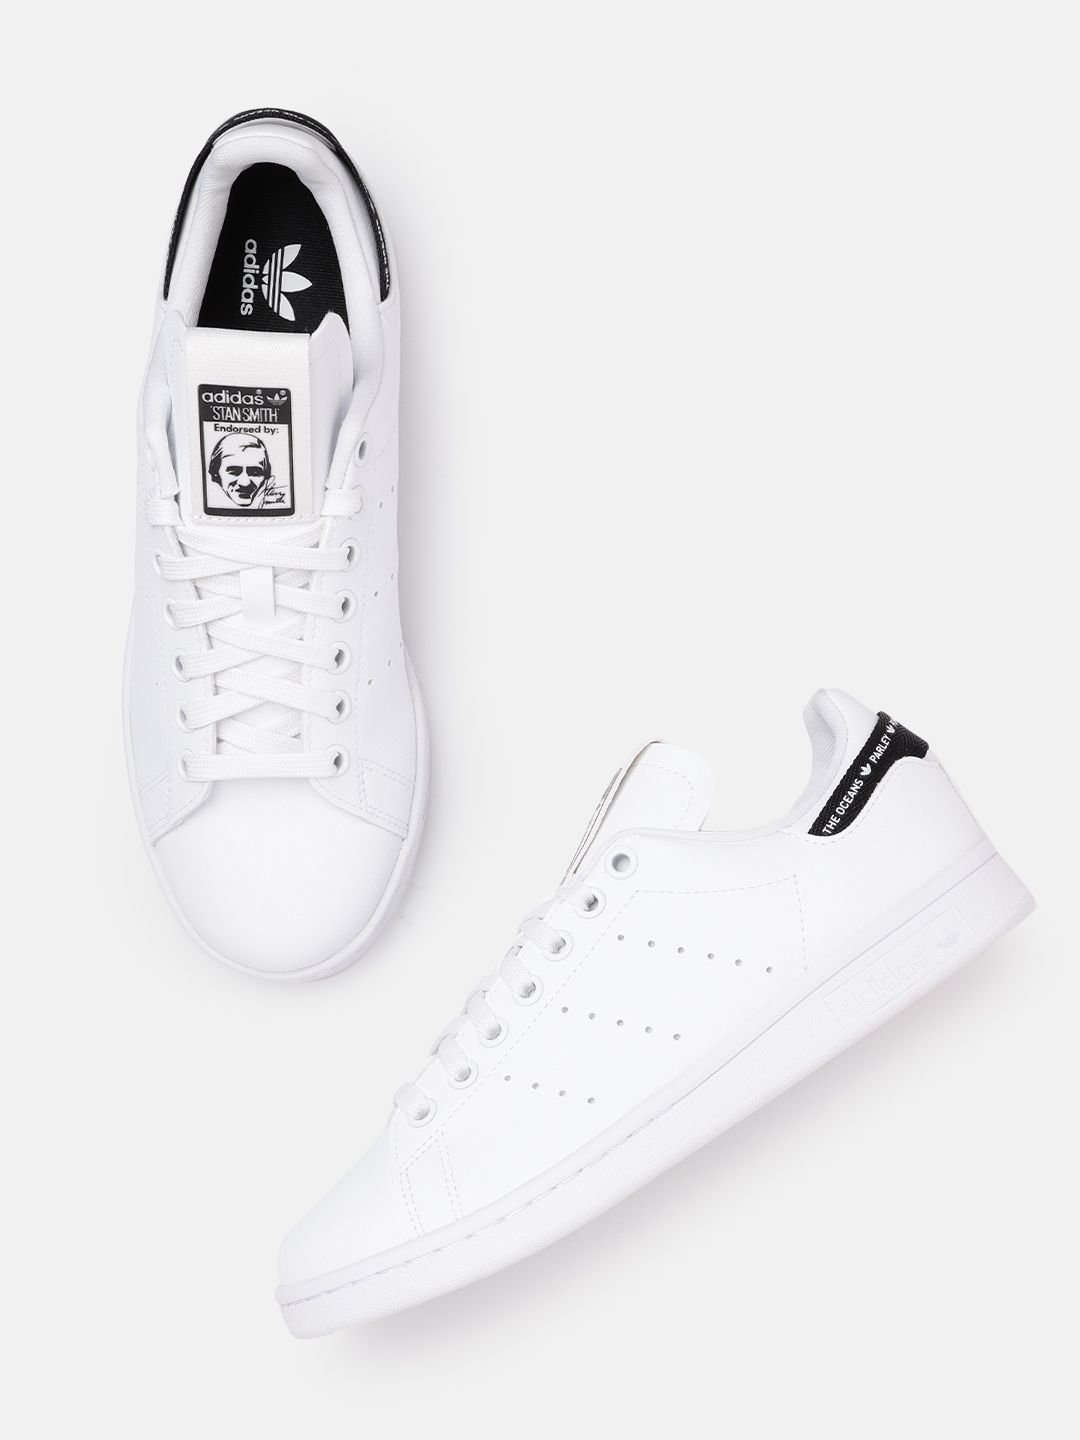 ADIDAS Originals Unisex White & Black Perforated Stan Smith Sneakers Price in India